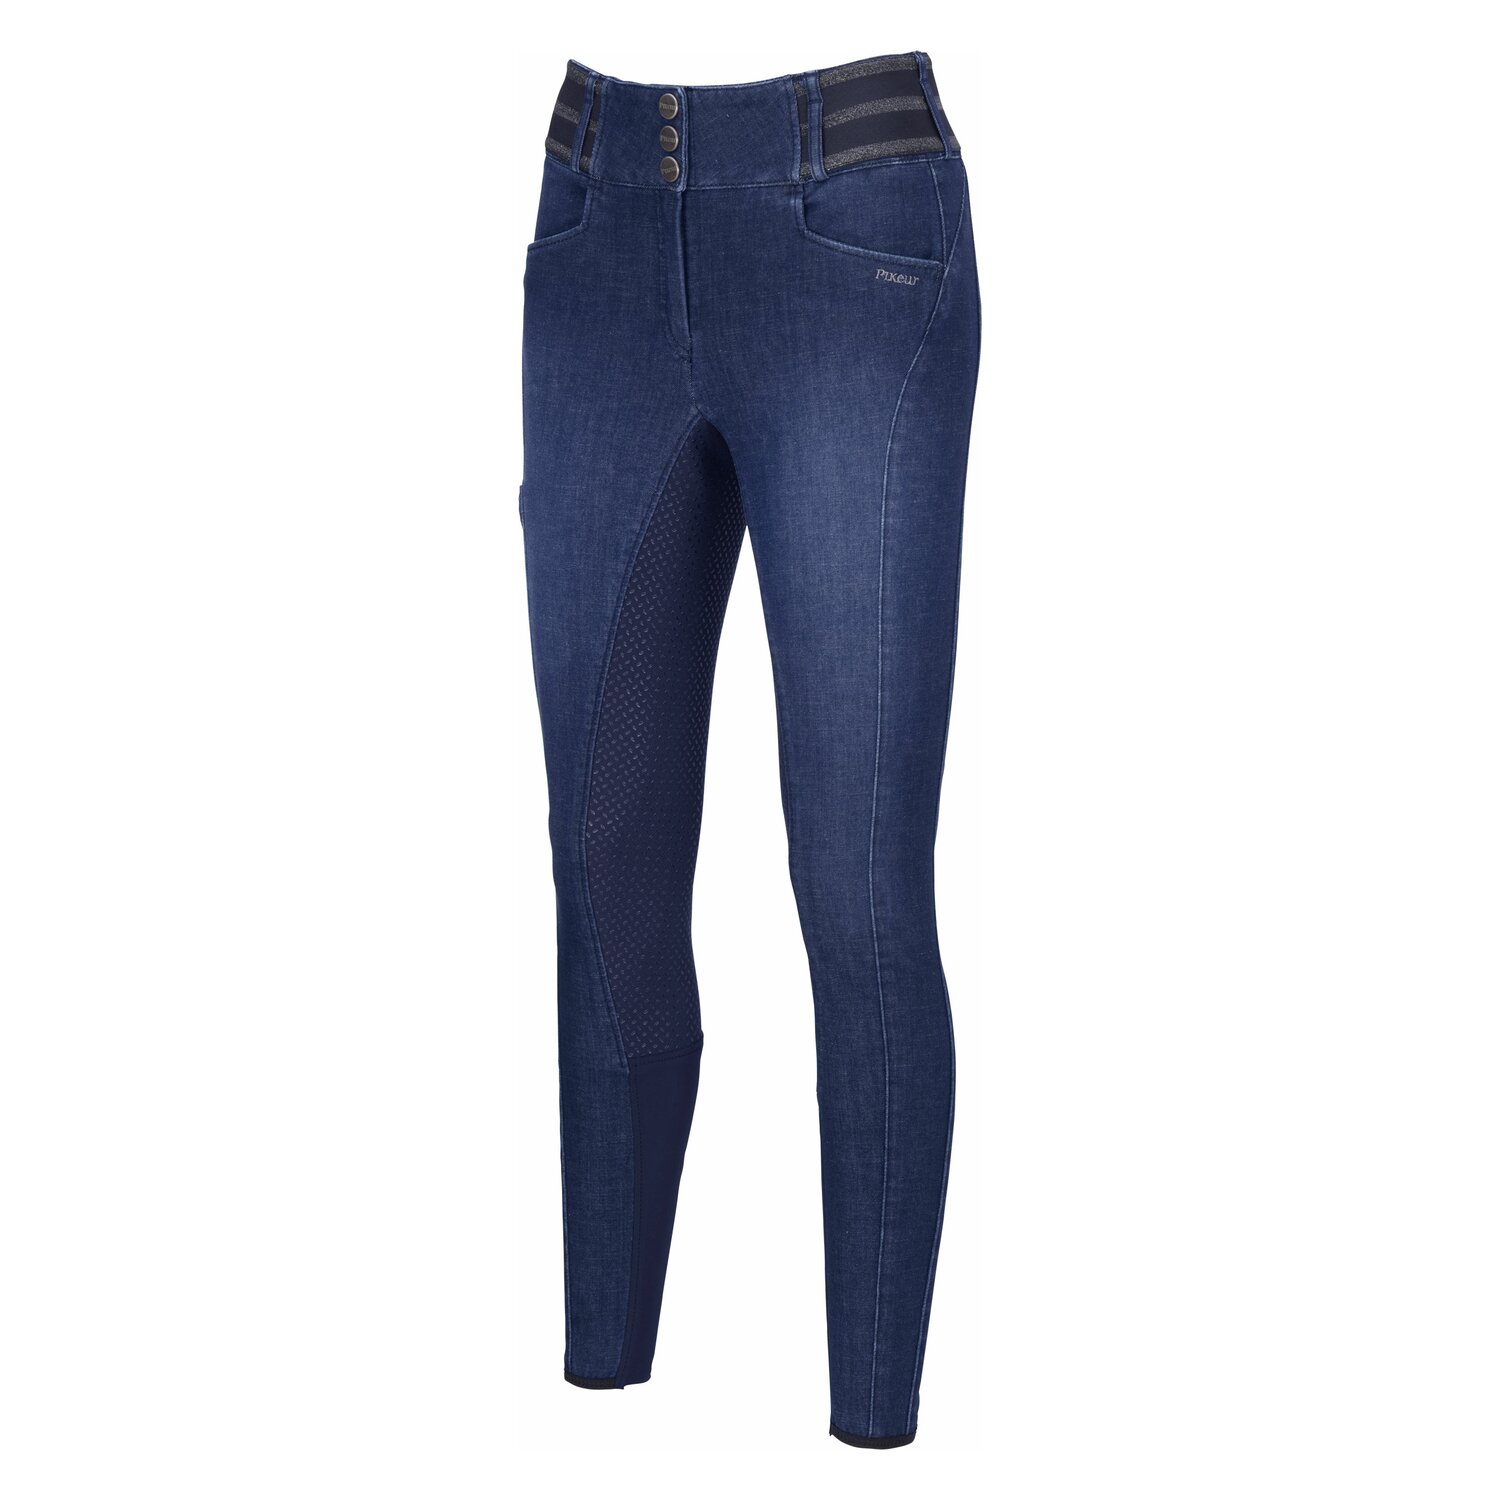 PIKEUR Gesäßeinsatz-Reithose Candela Jeans denim blue | 36